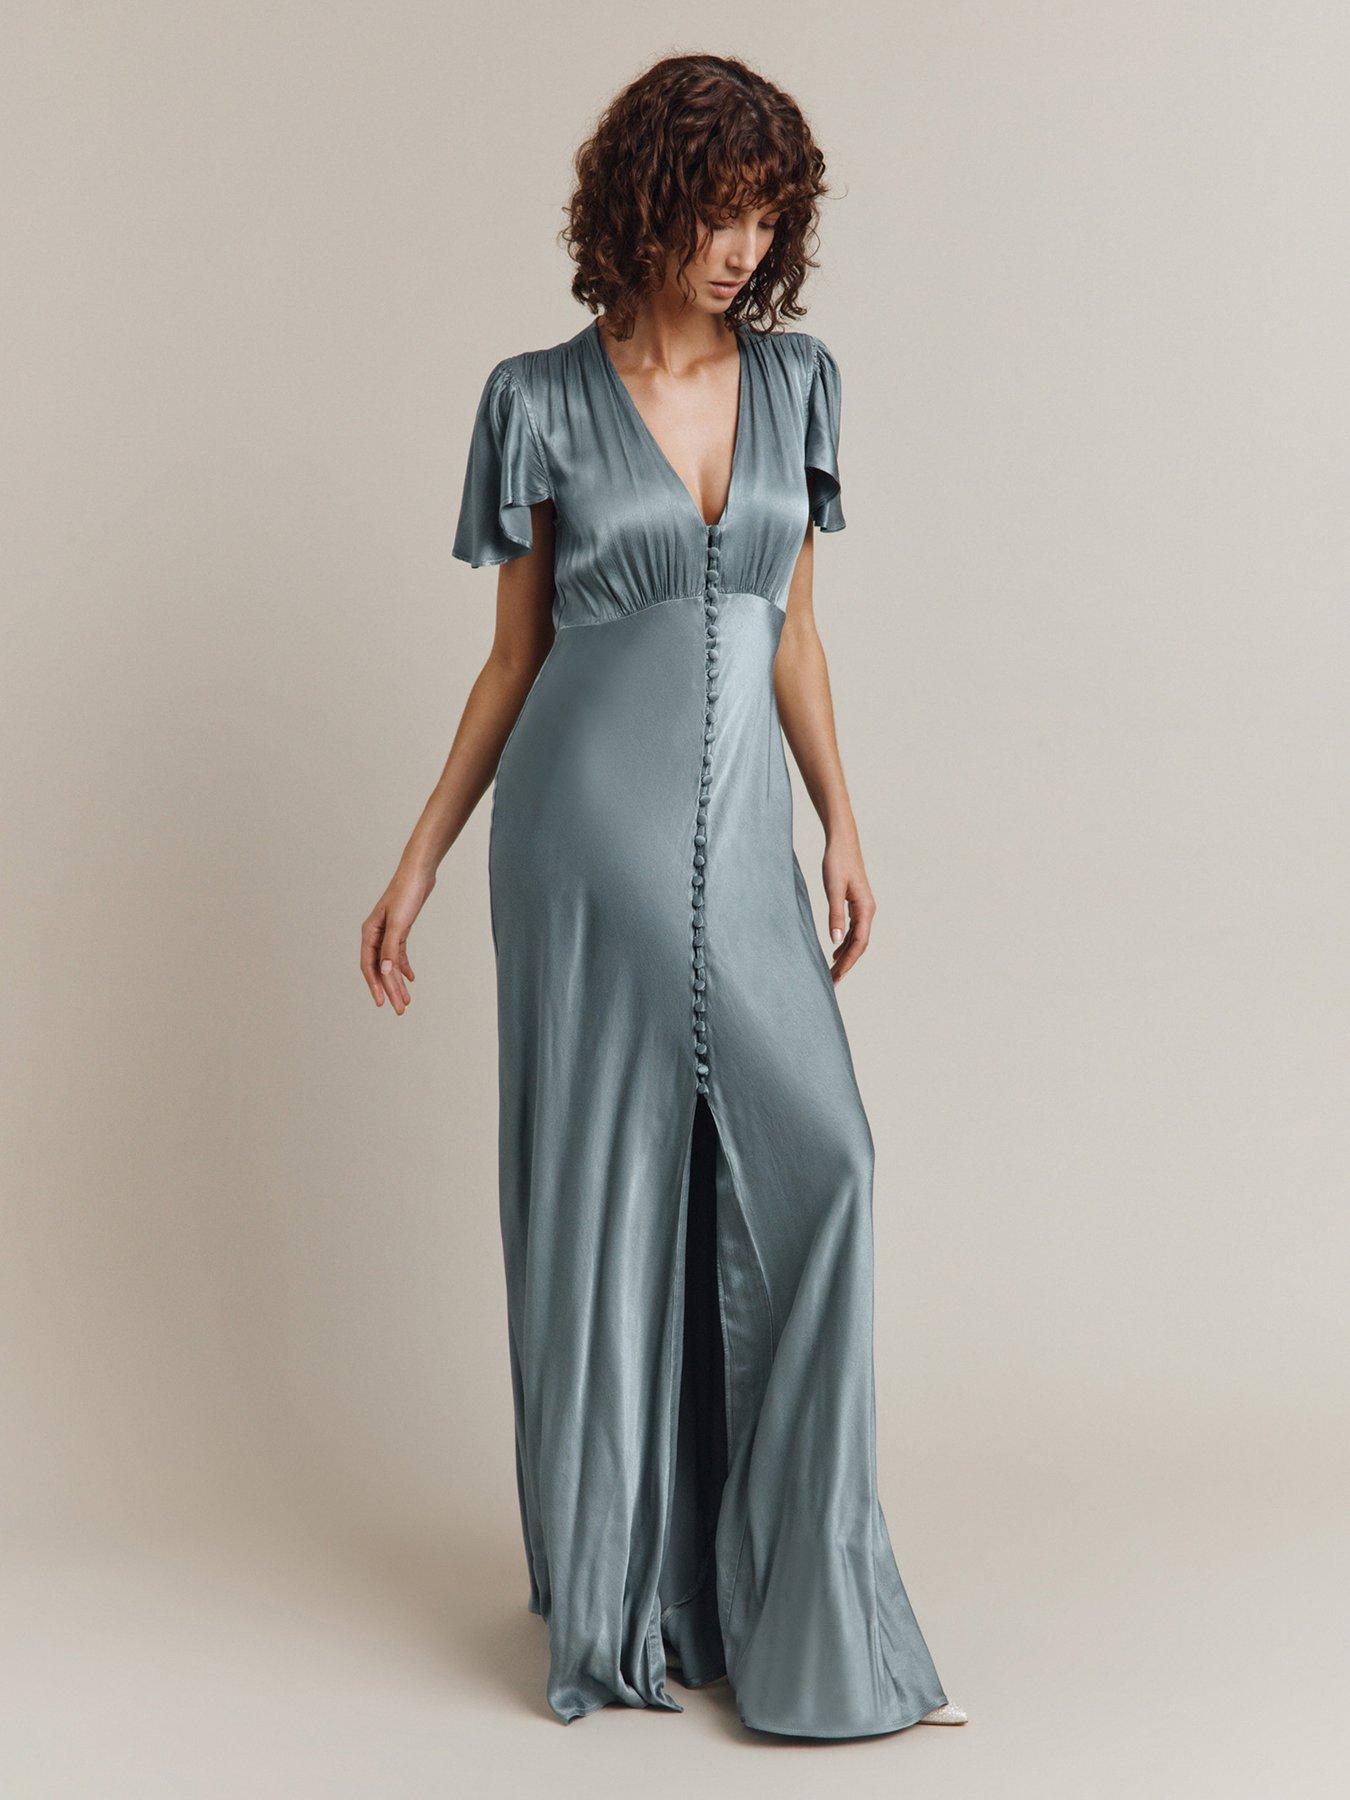 Milana Embellished Shirt Dress in Sustainable Viscose Blue, Evening Dresses